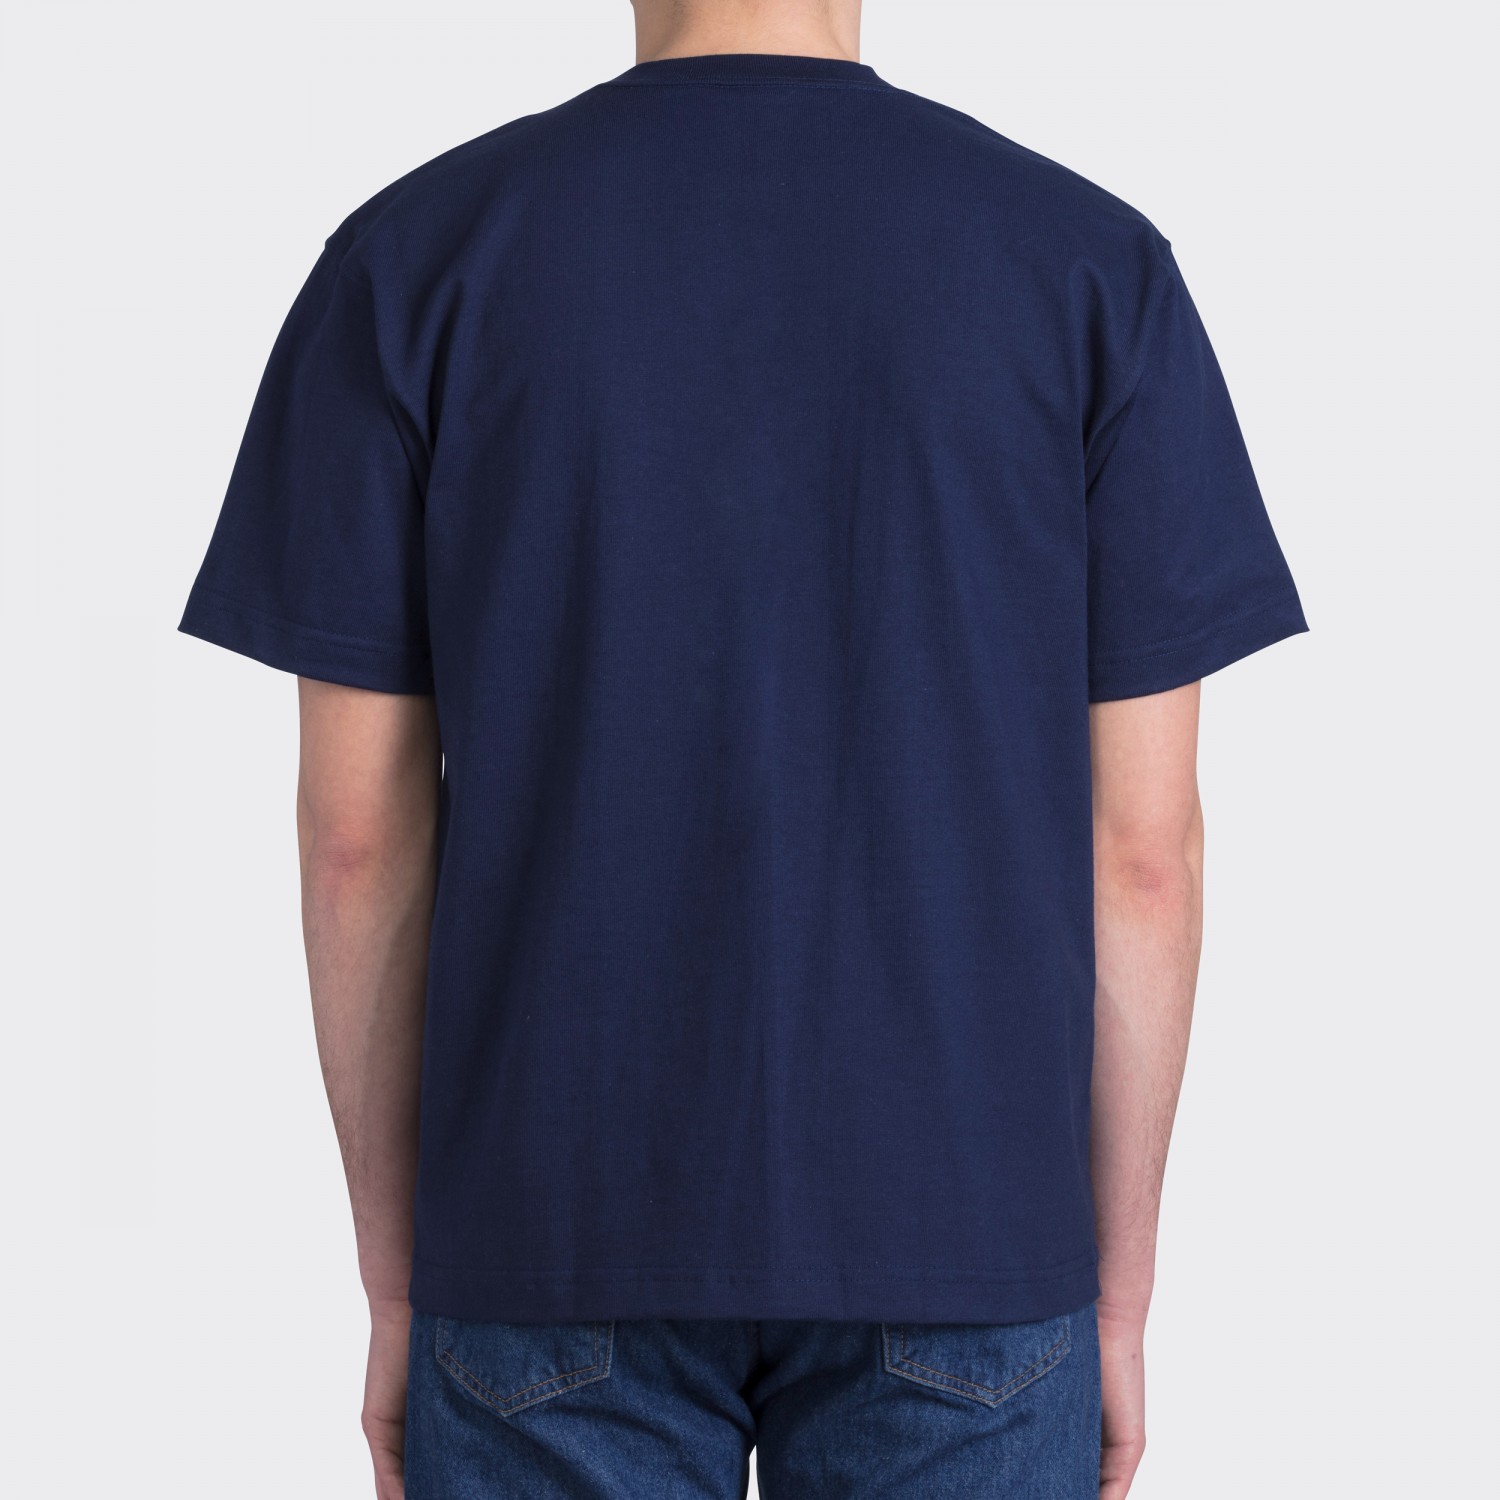 Camber Navy : T-shirt Pocket : USA